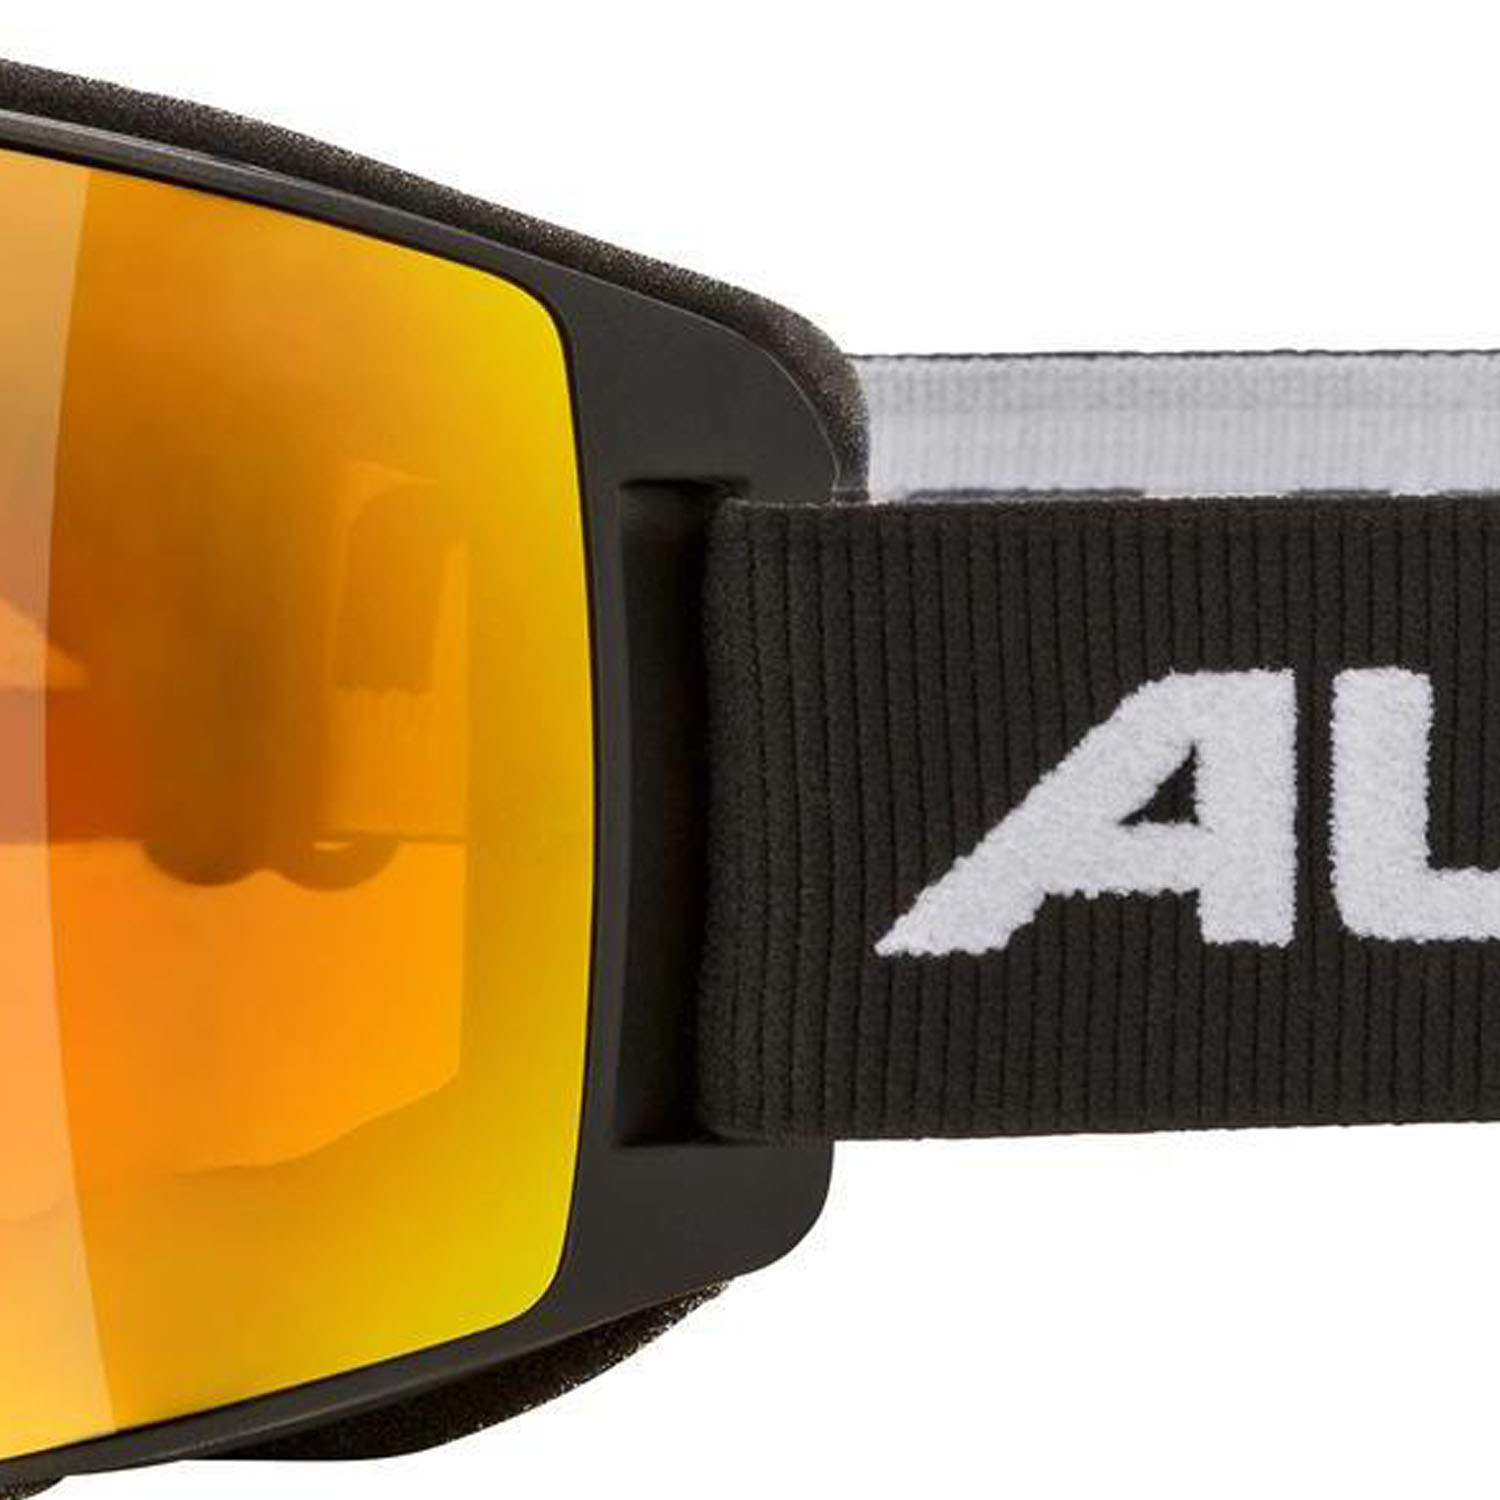 Очки горнолыжные ALPINA Naator Q-Lite Black Matt/Q-Lite Orange Sph. S2